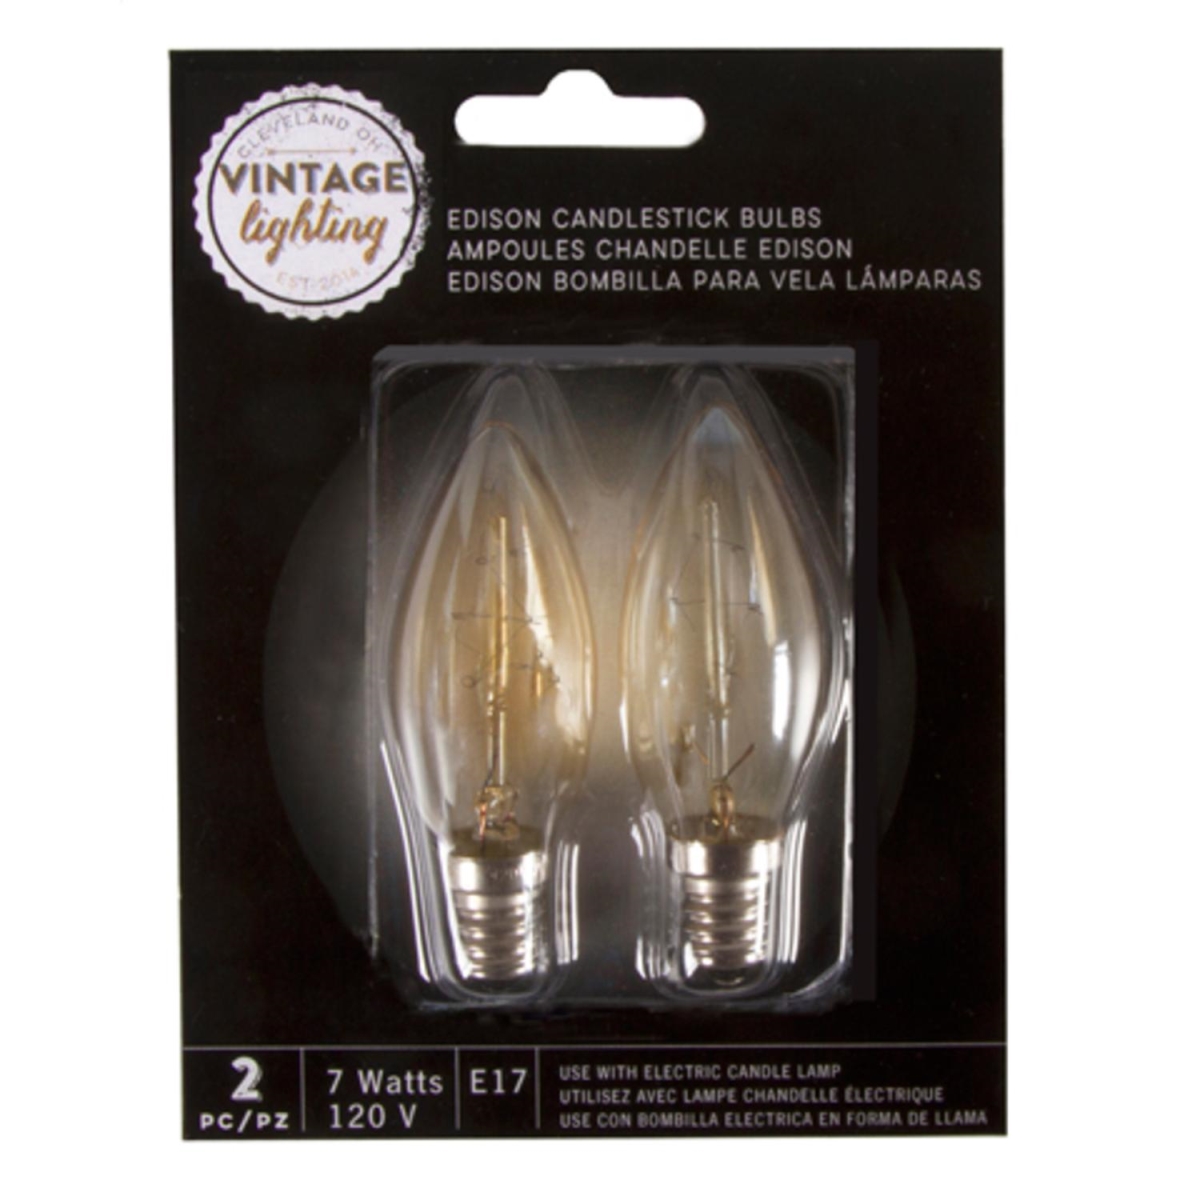 32038407 7 Watt Cleveland Vintage Lighting Edison Style E17 Base Candlestick Bulbs - Pack Of 2